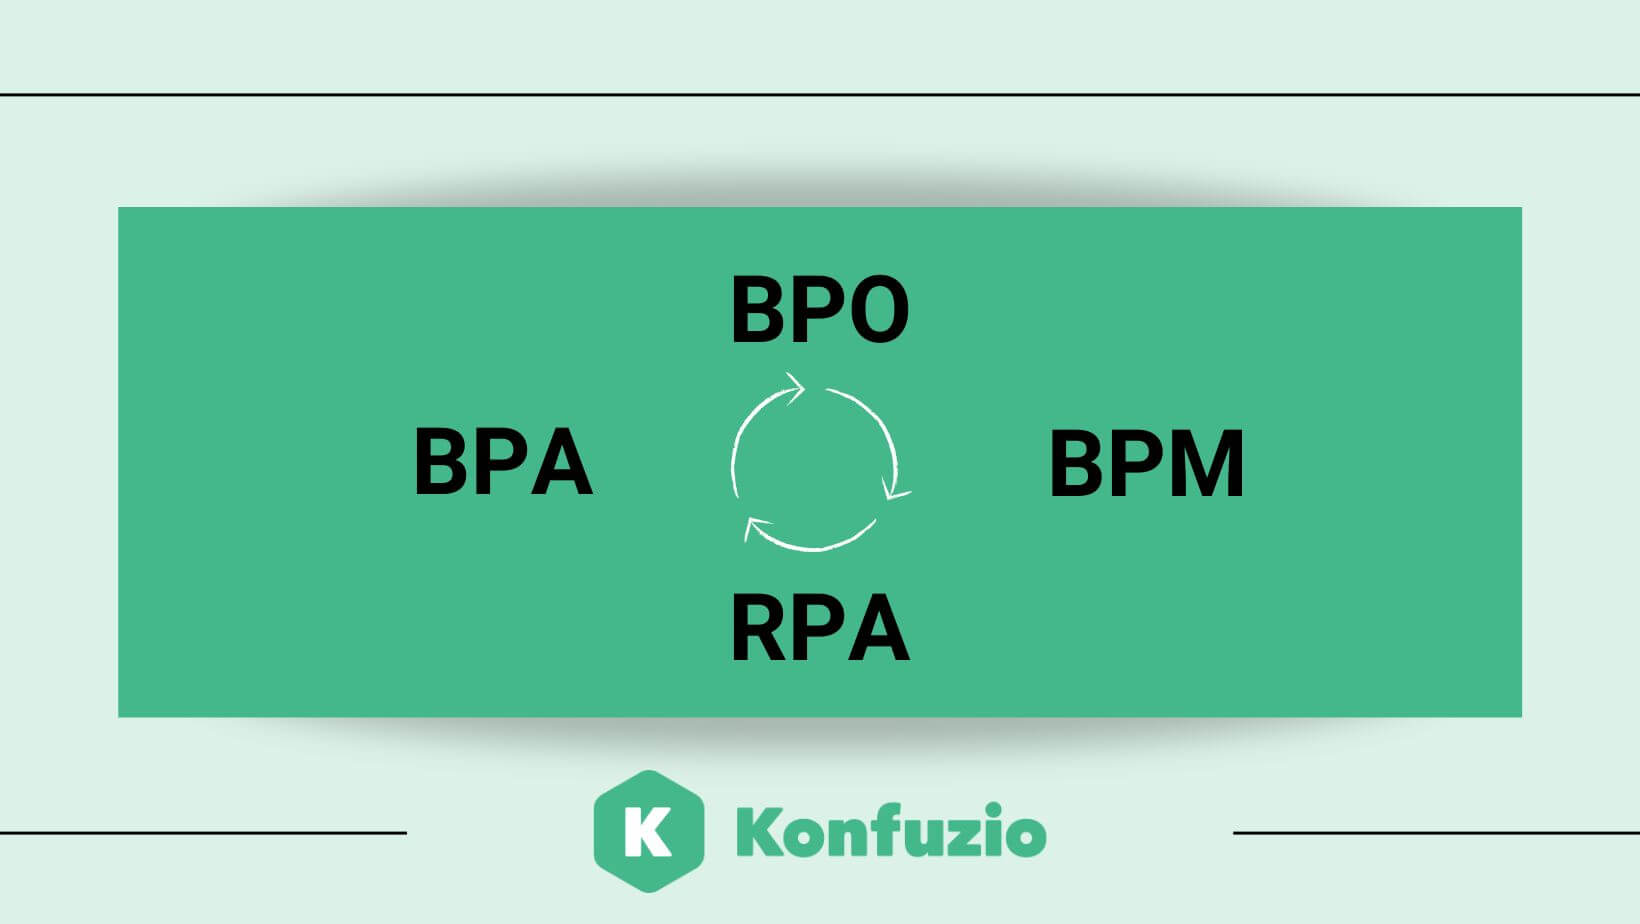 BPA Software BPO BPM RPA on green background